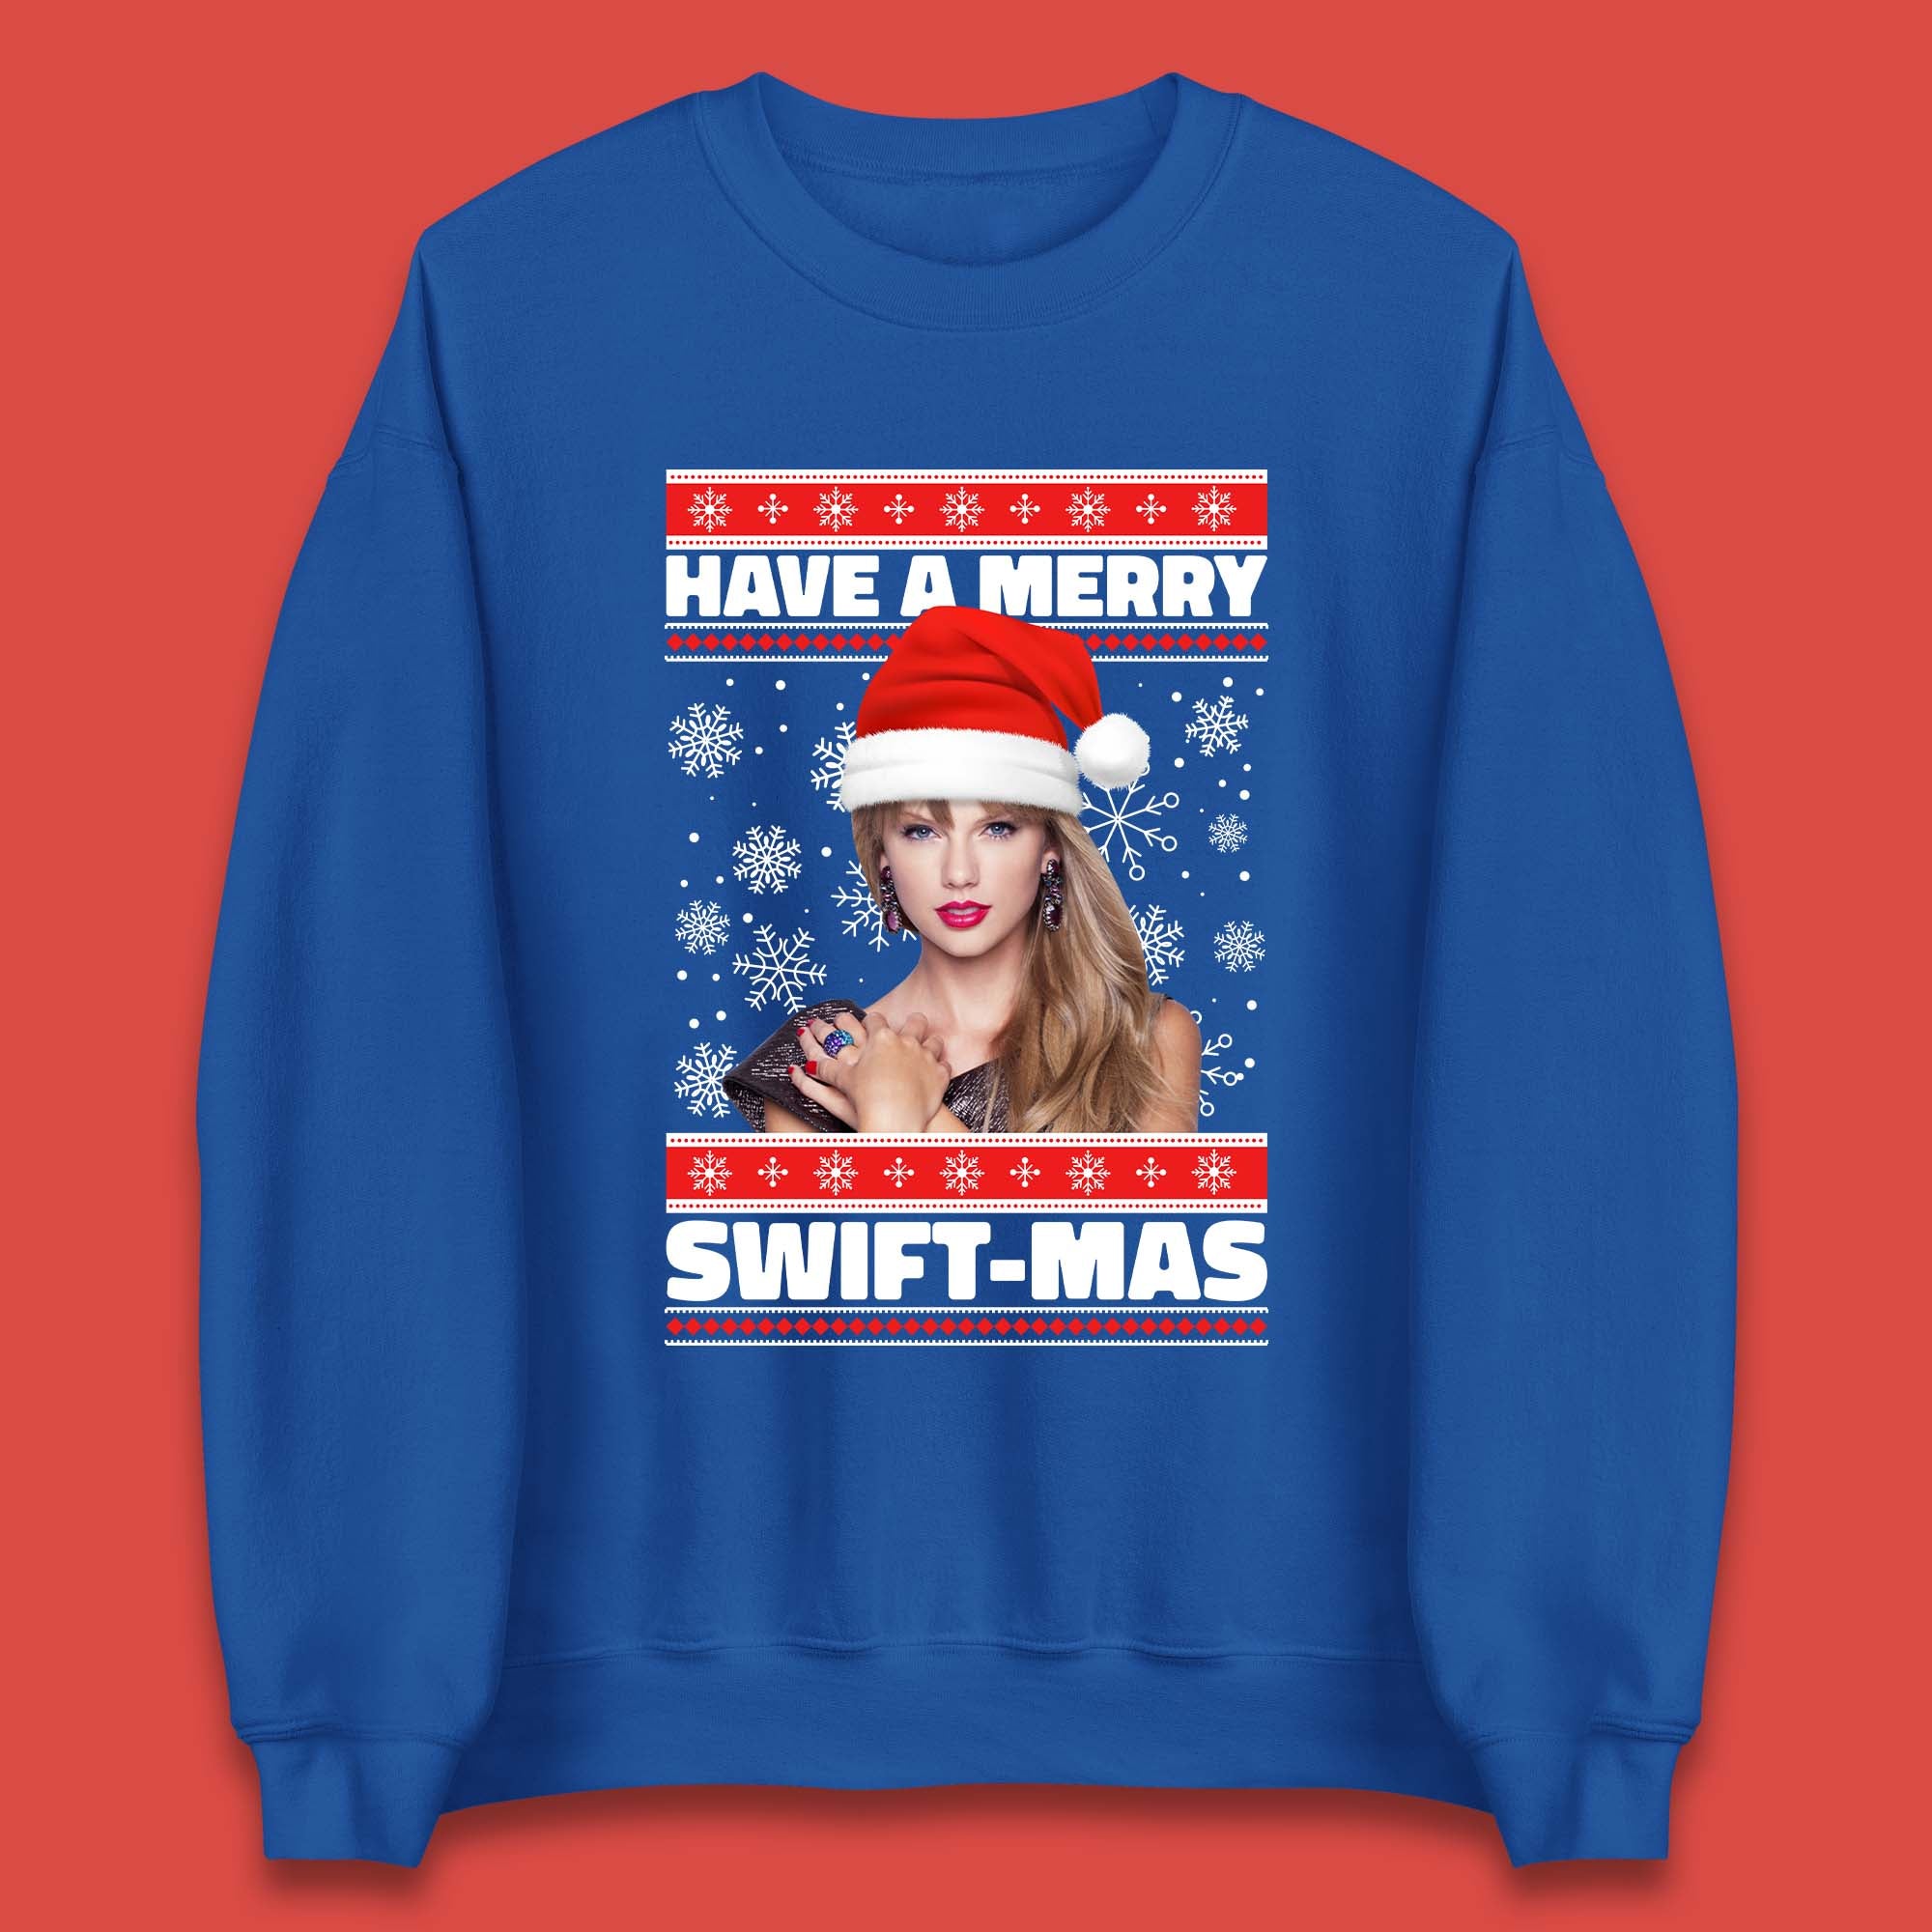 Taylor Swift Christmas Jumper UK